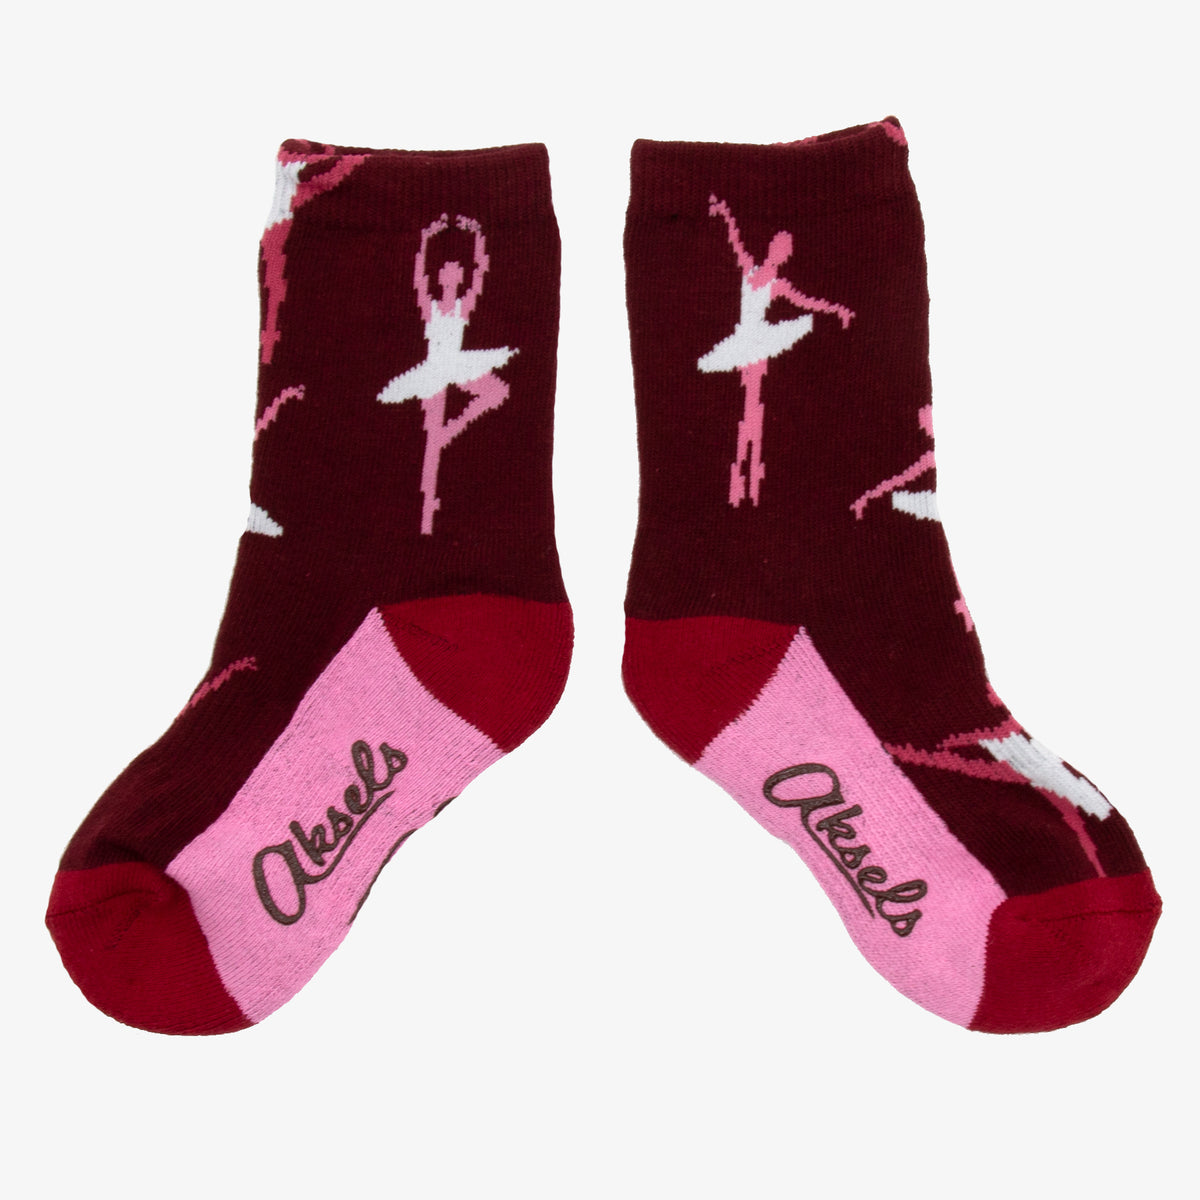 Kids Ballerina Socks, Boys & Girls Socks, Size 4-8 years old